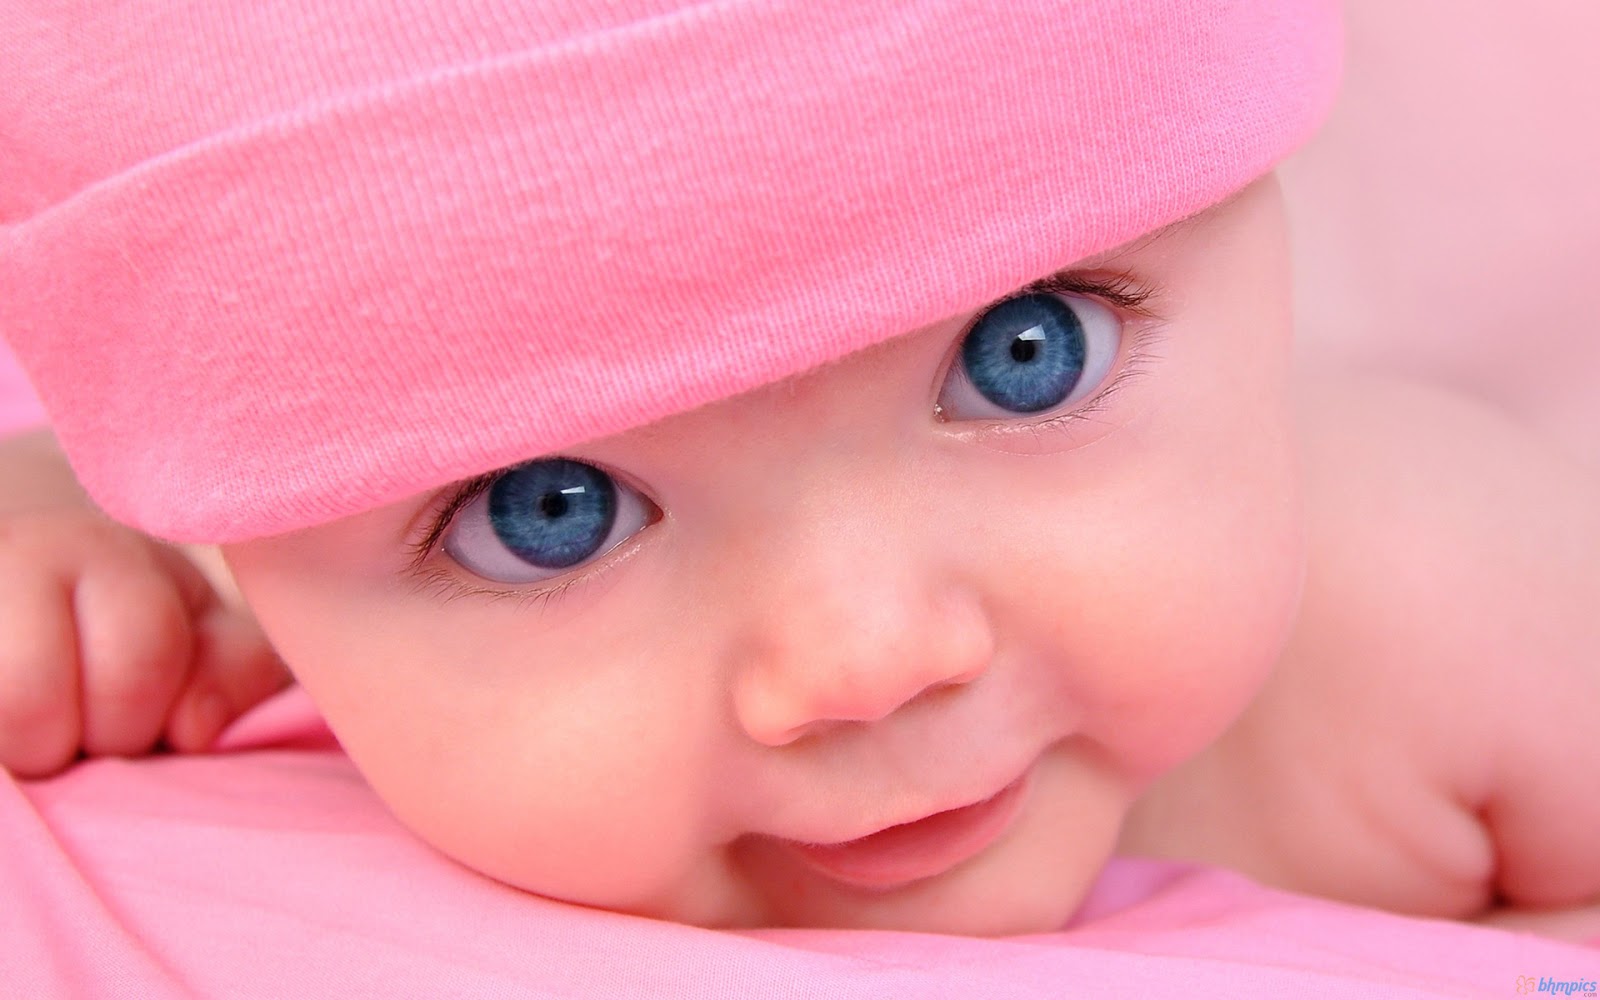 Cute Blue Eyes Baby With Pink Cap HD Wallpaper Little Babies